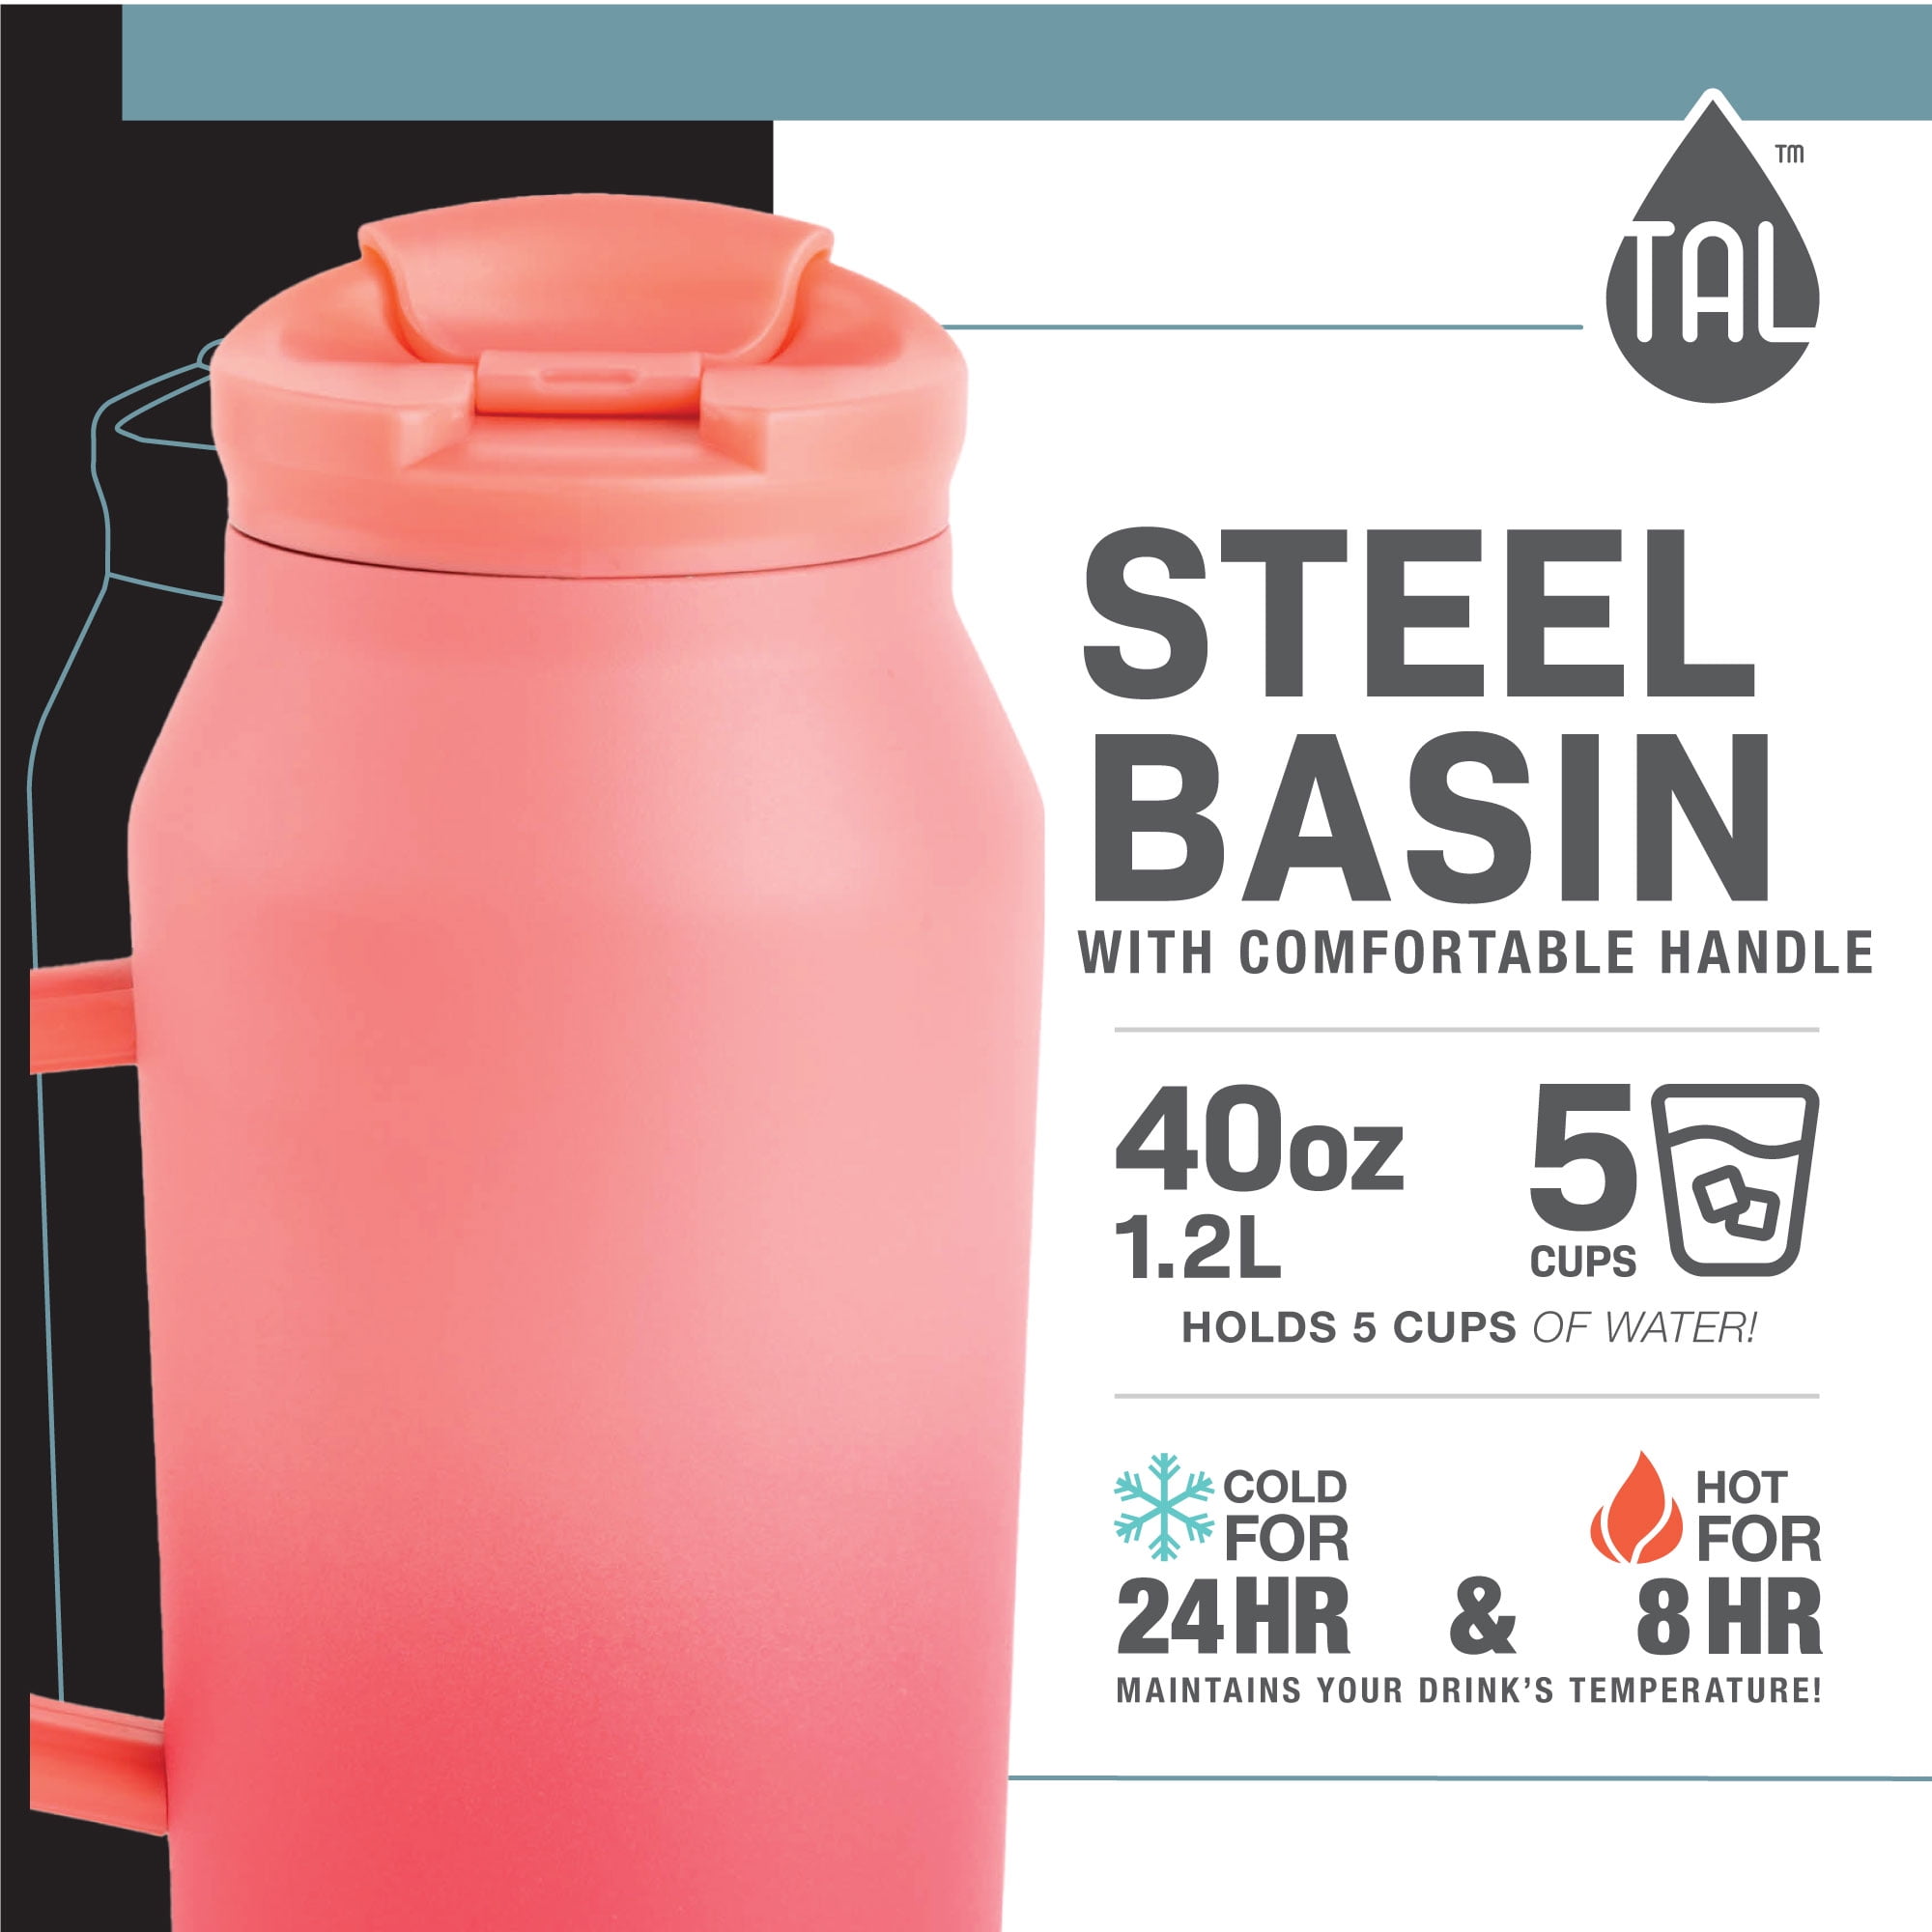 40oz Basin Black Tropical (pack of 6) – TAL™ Hydration